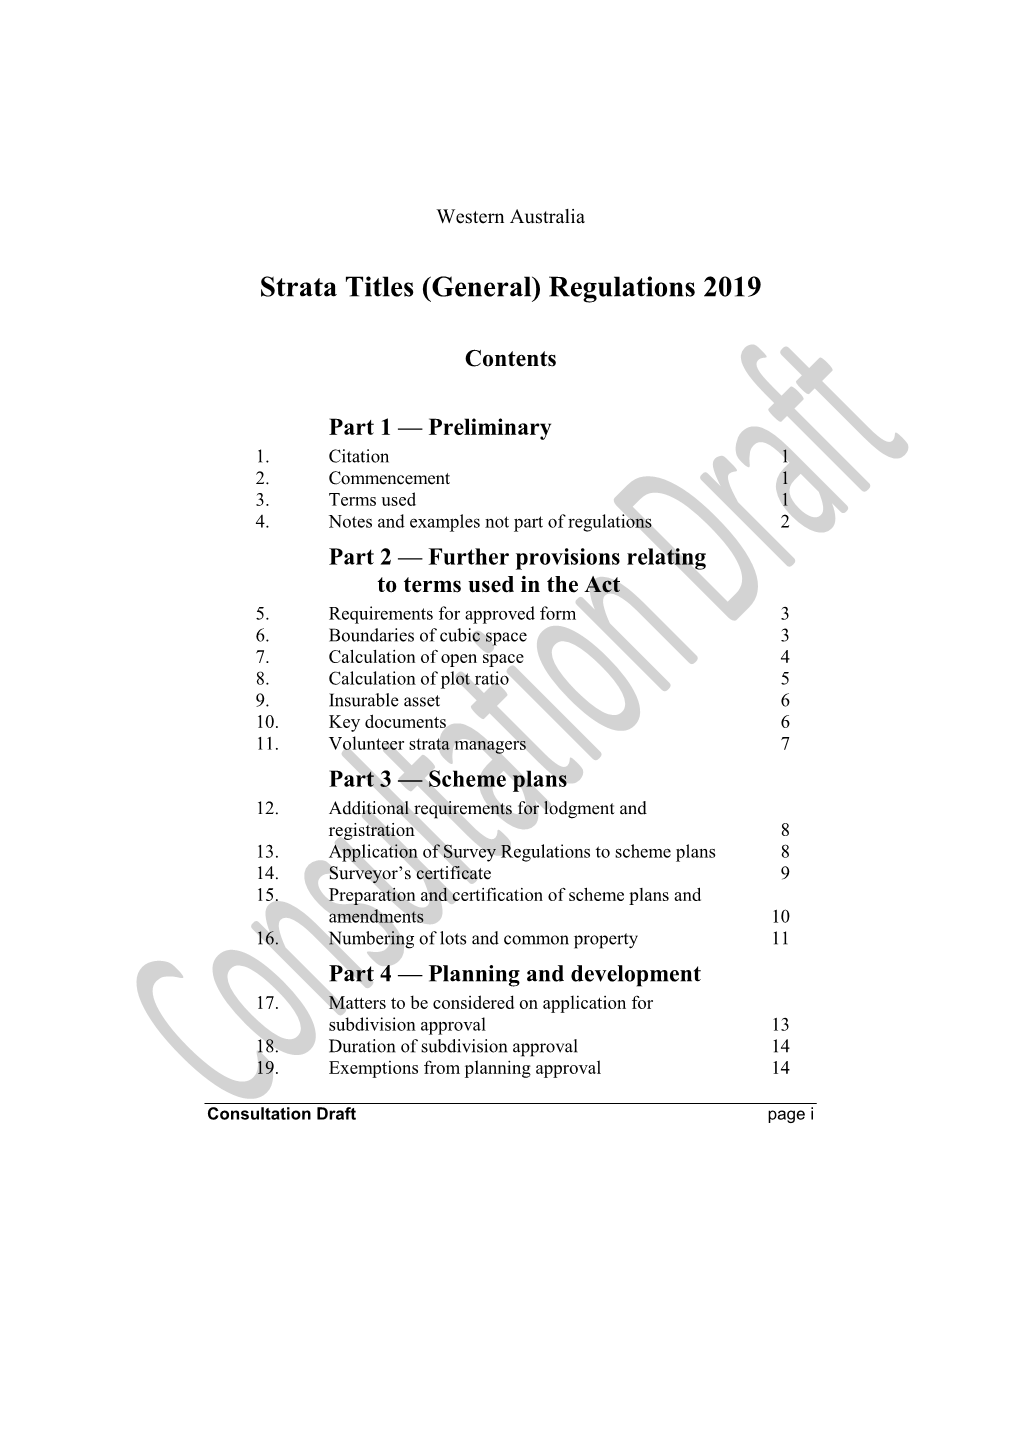 Strata Titles (General) Regulations 2019